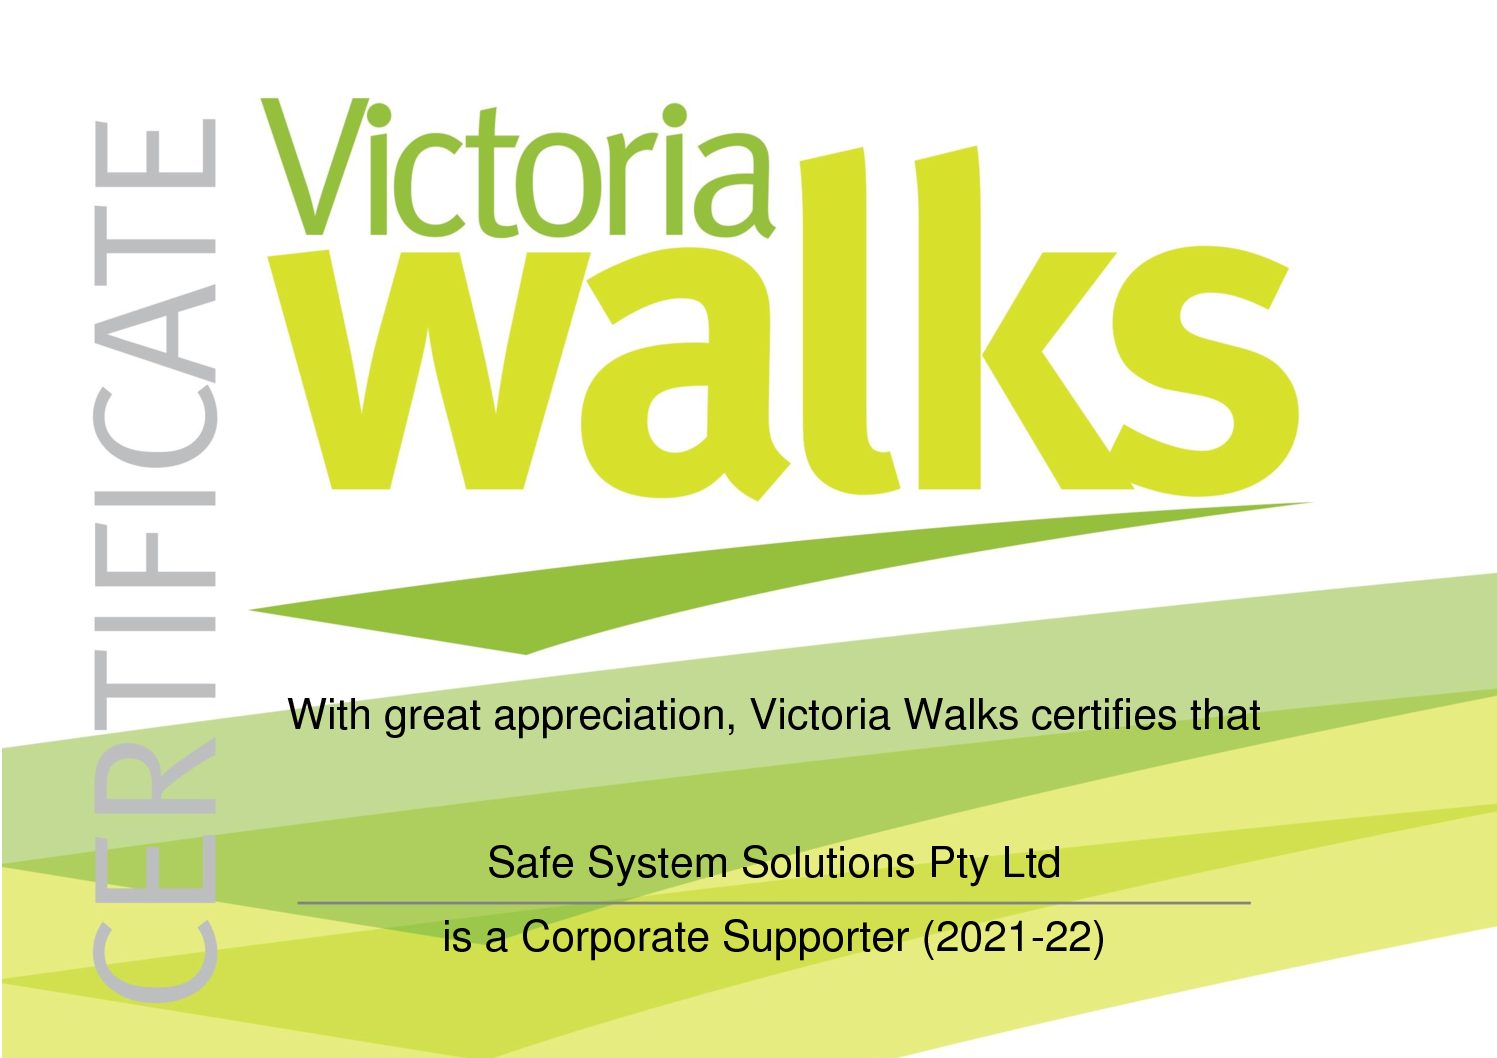 Corporate Support of Victoria Walks